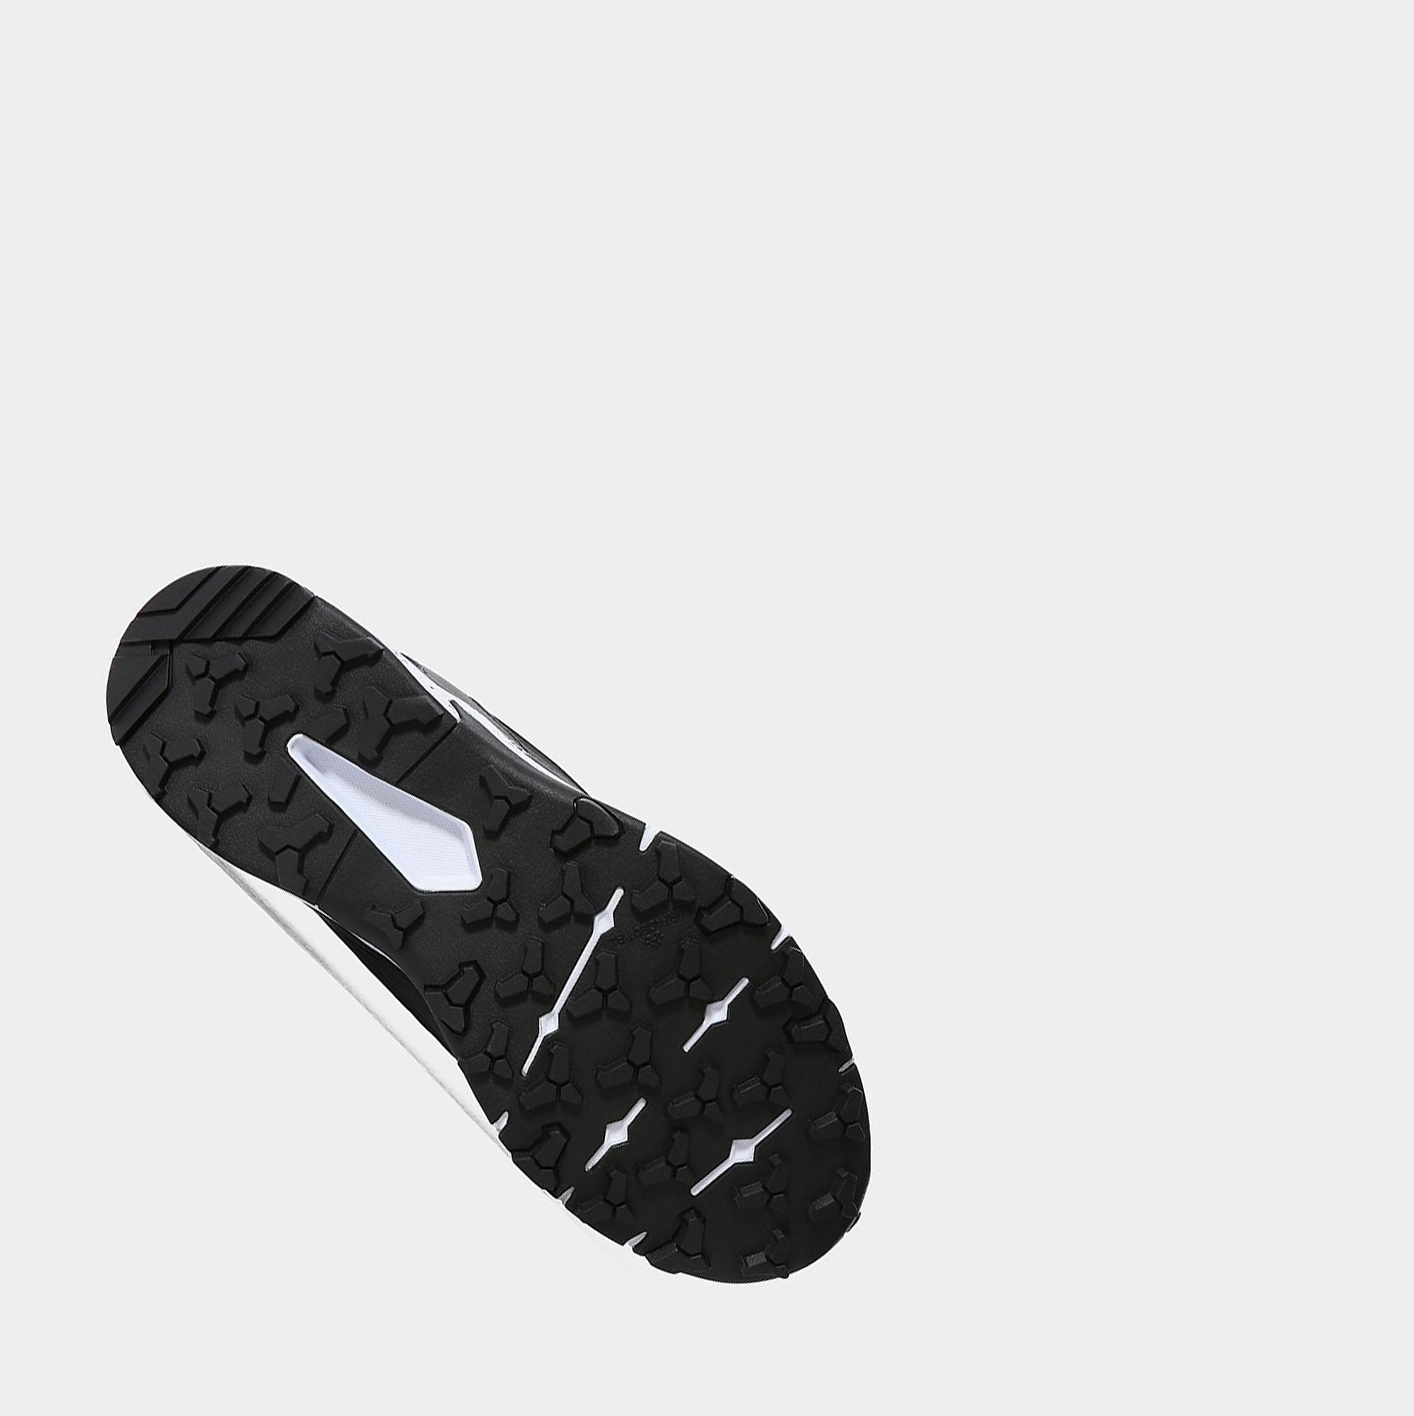 Men's The North Face VECTIV TARAVAL Trail Running Shoes Black White | US057HEZF